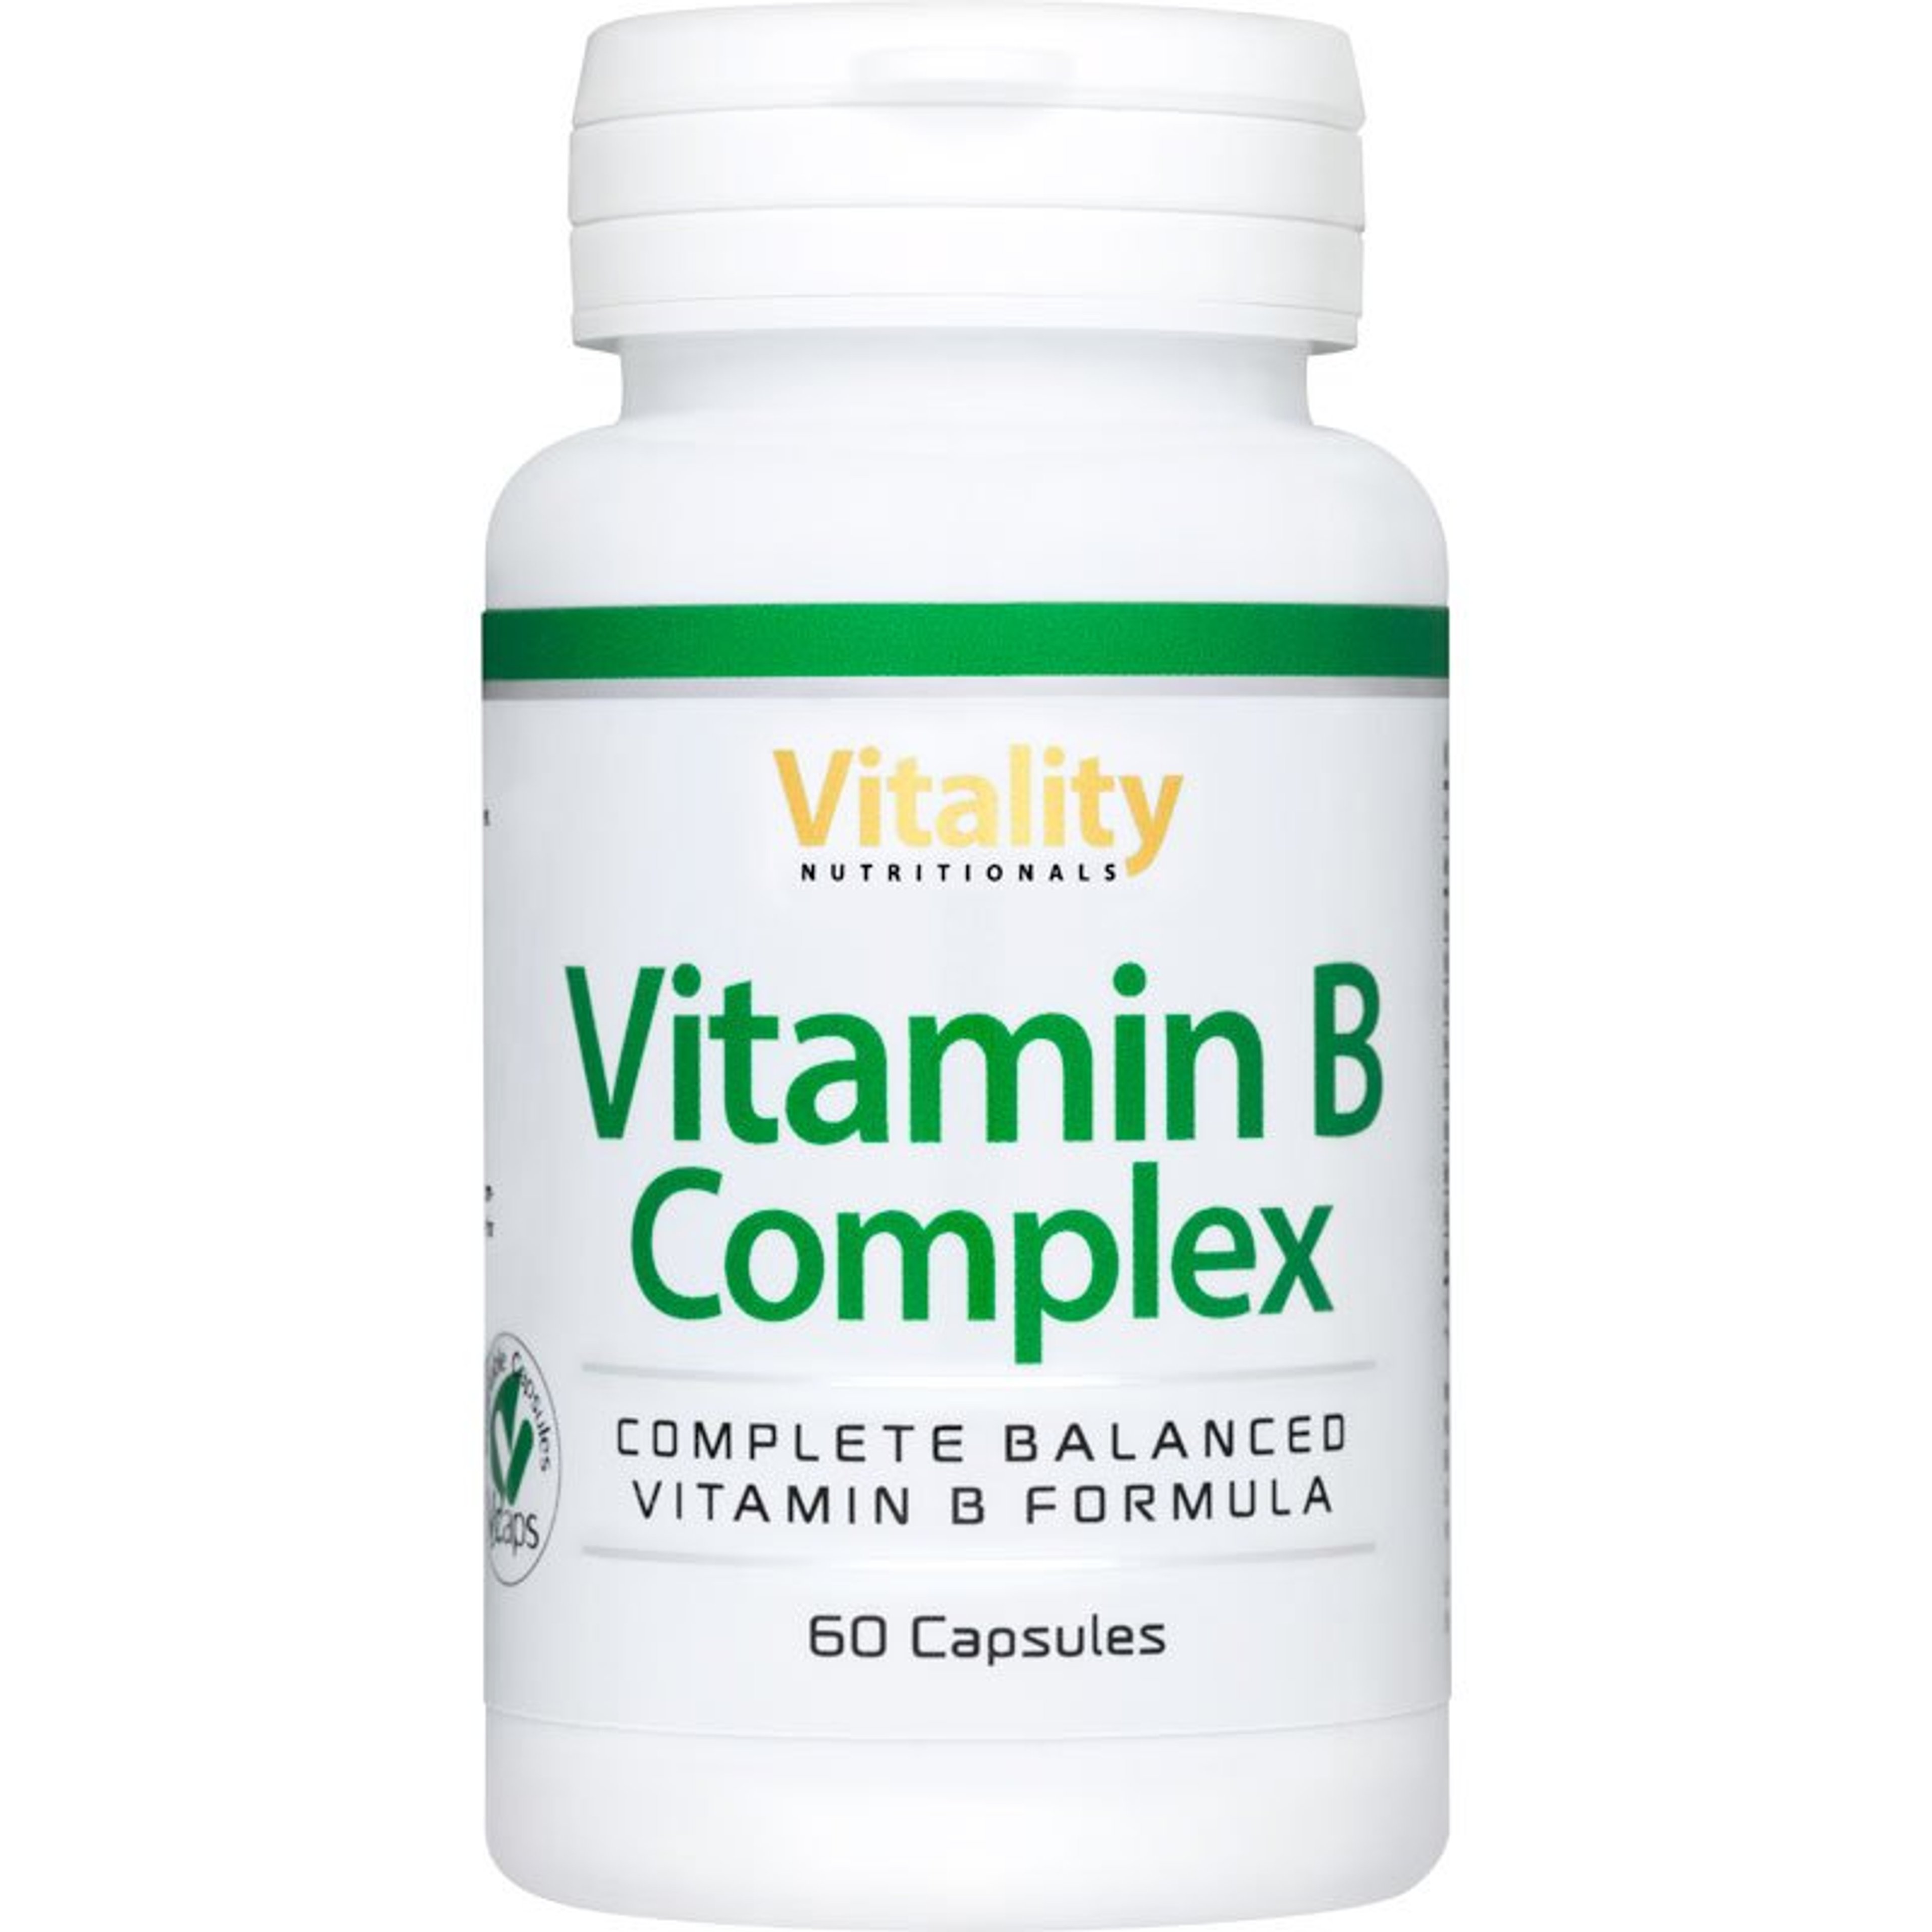 vitality-nutritionals-vitamin-b-complex_1.jpg